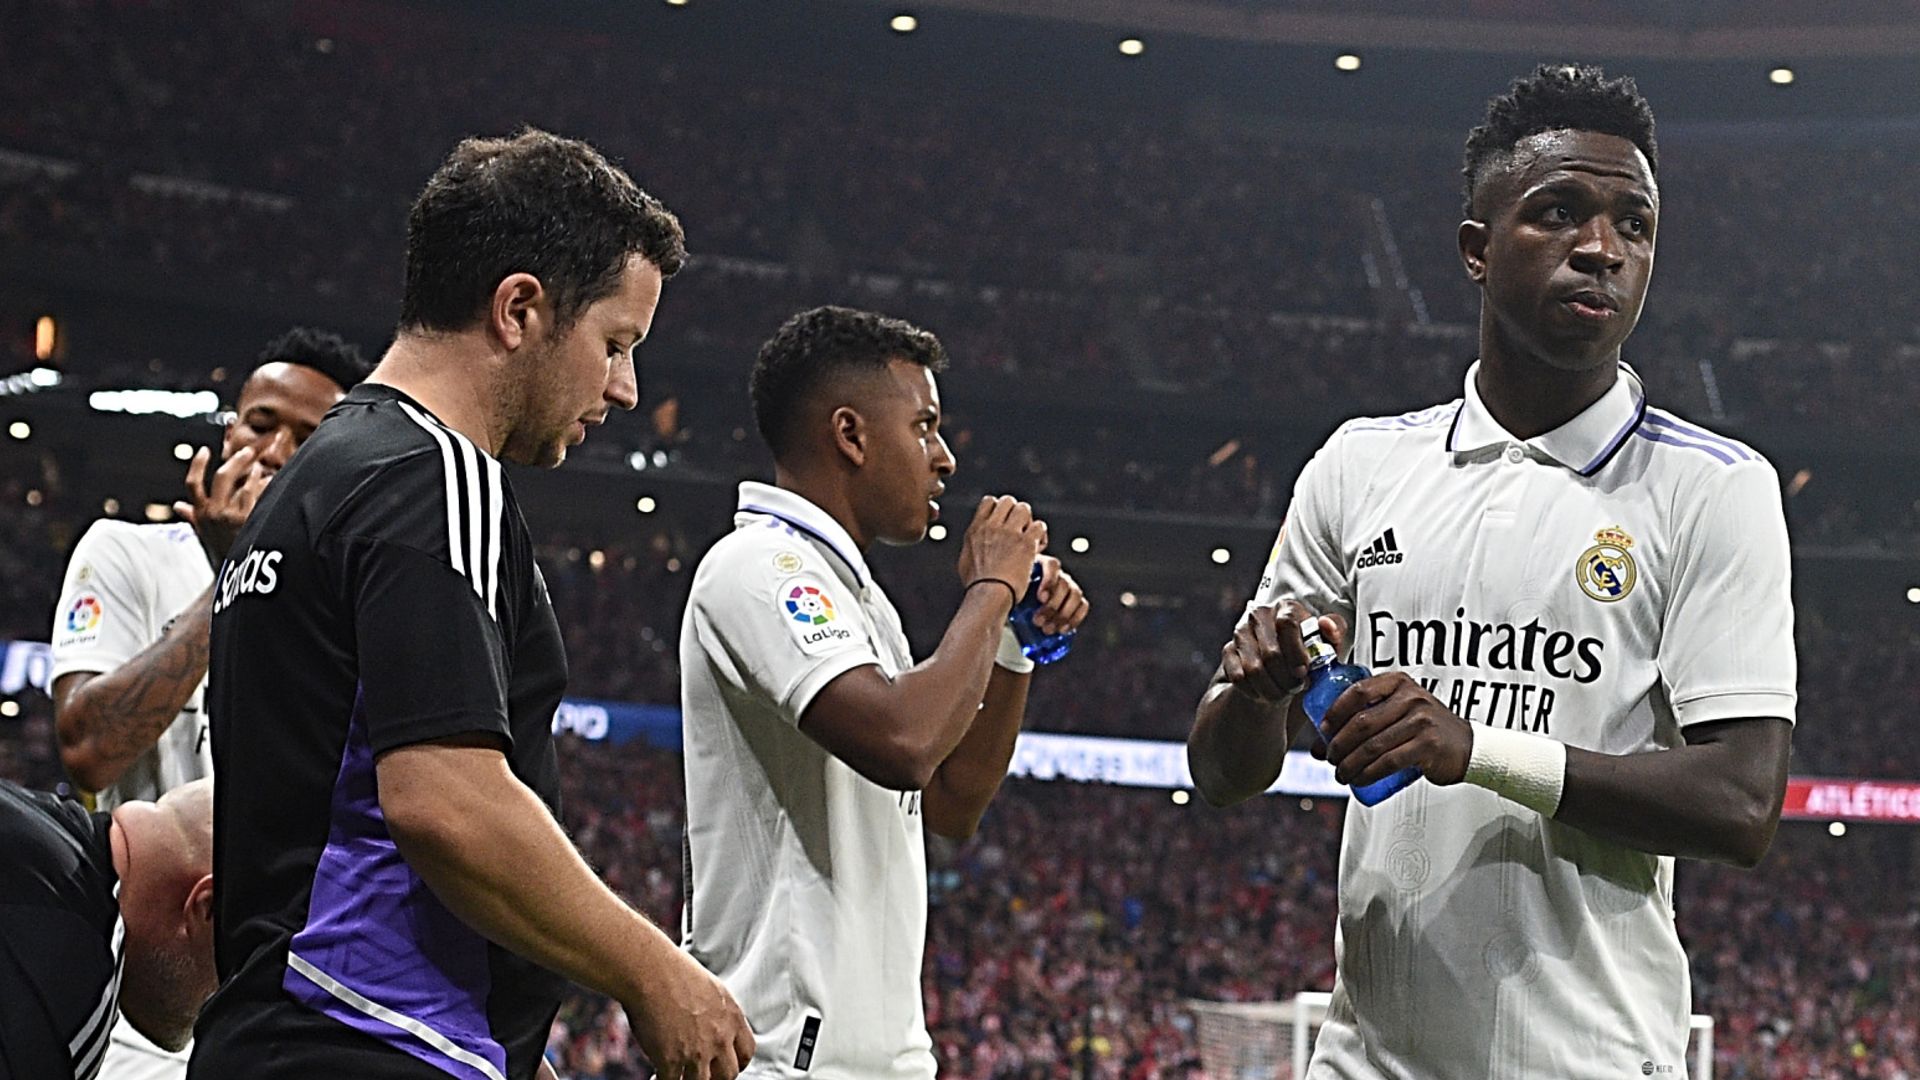 La Liga condemns racist chanting at Real's Vinicius Jr in Madrid derby